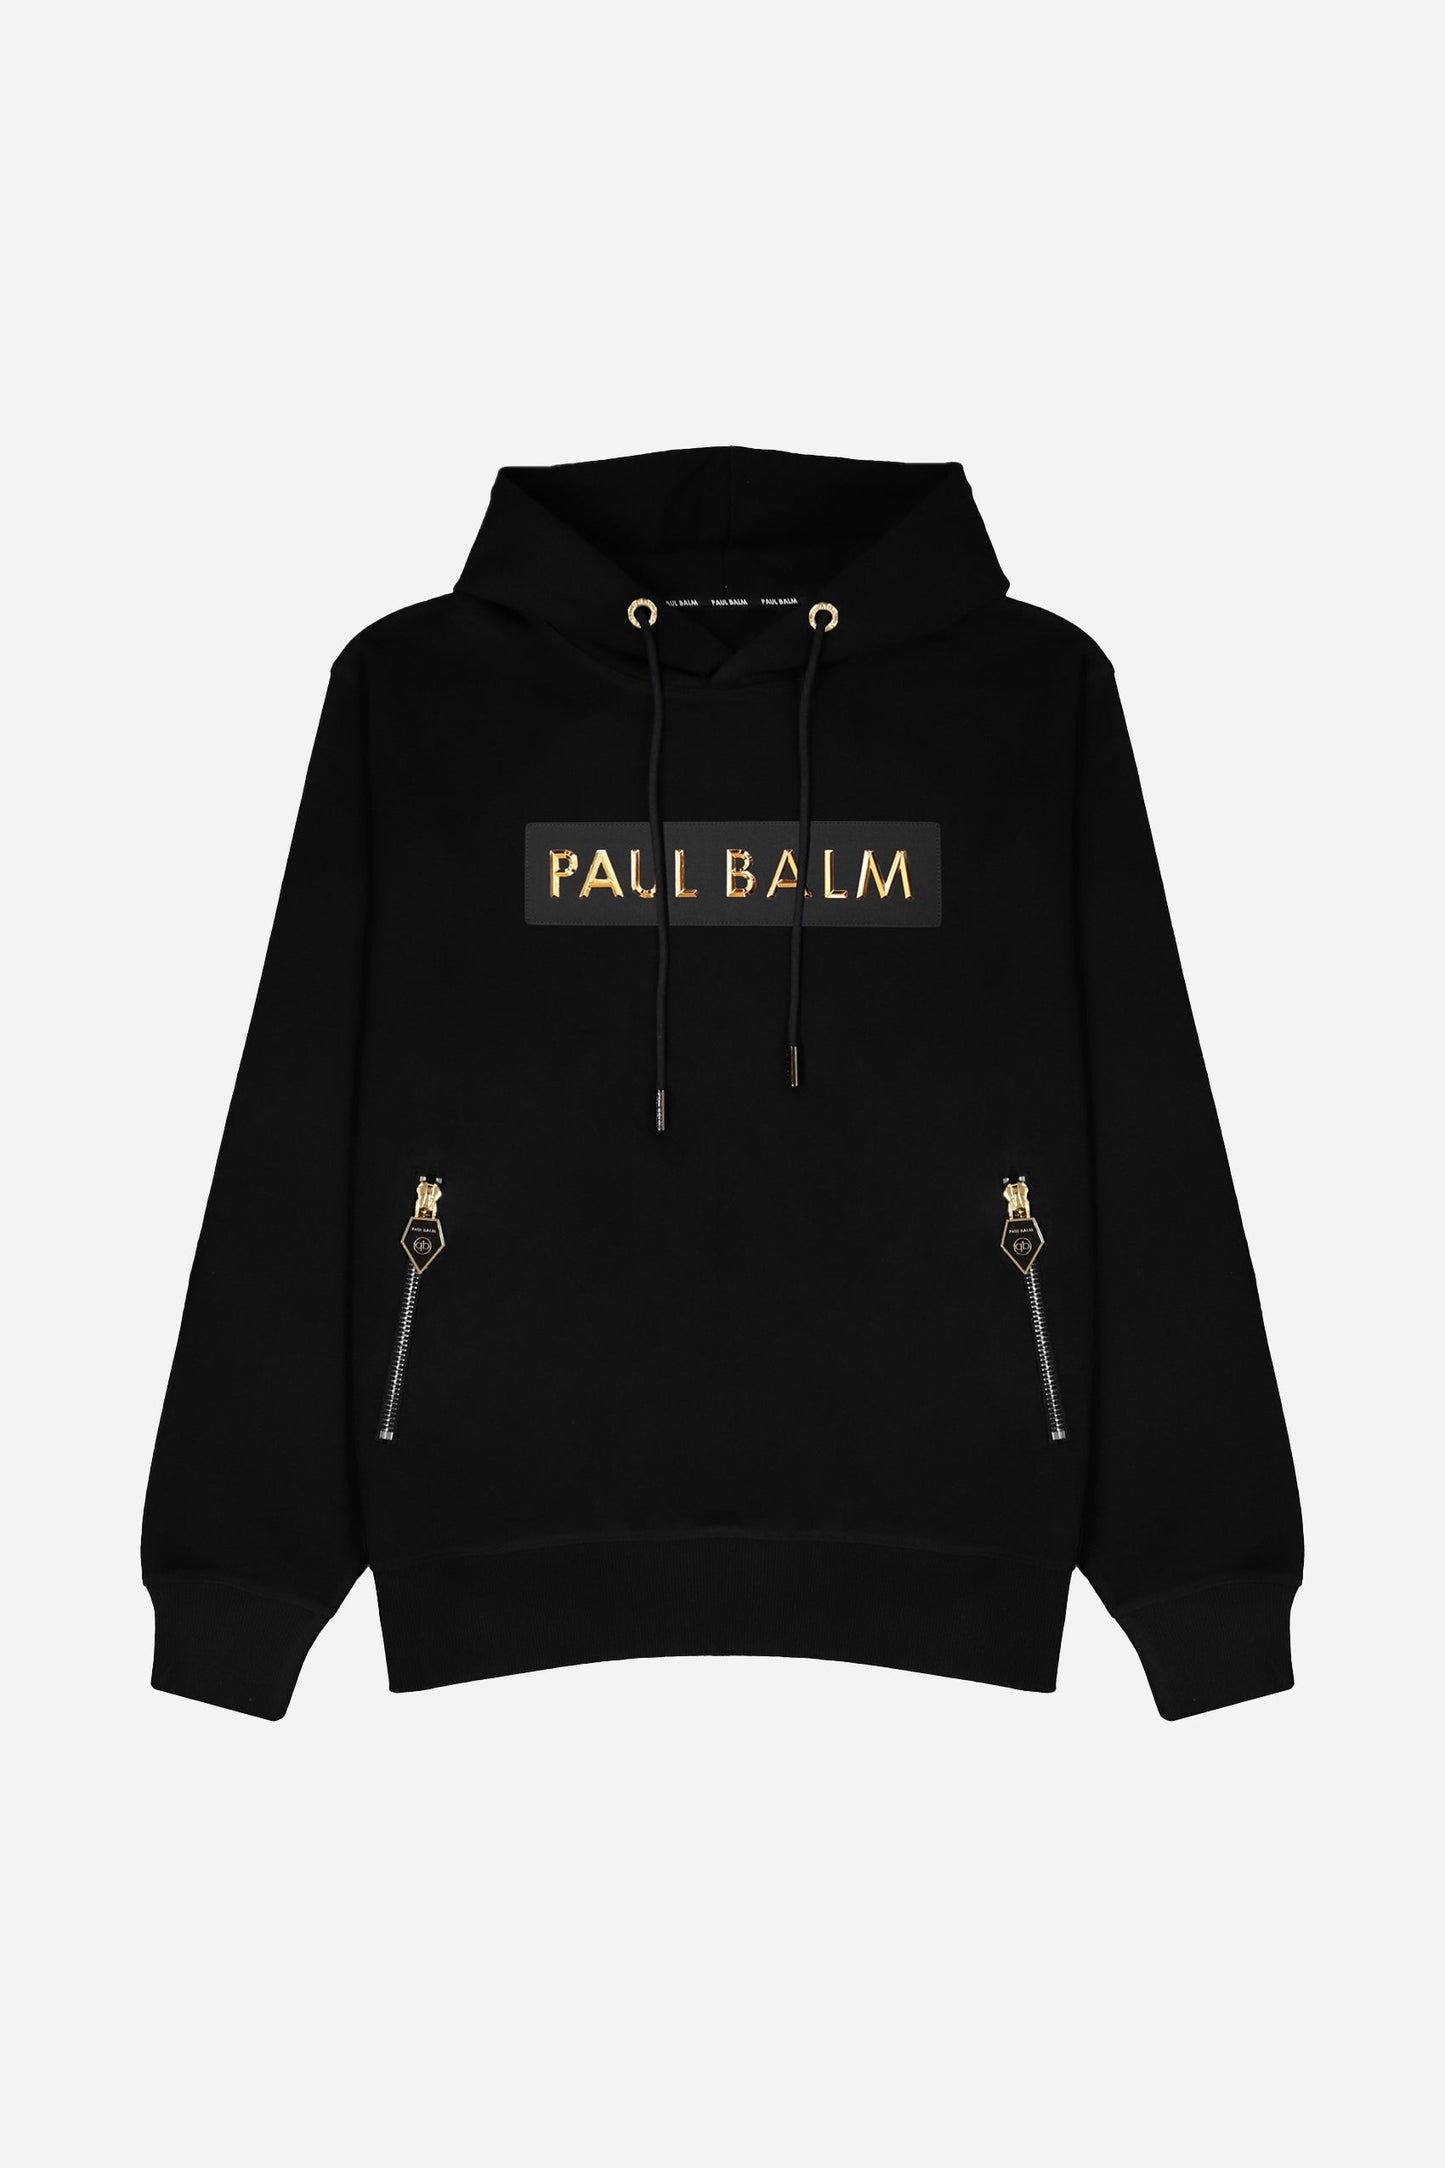 PAUL BALM Metal Patch gold/black Hoodie